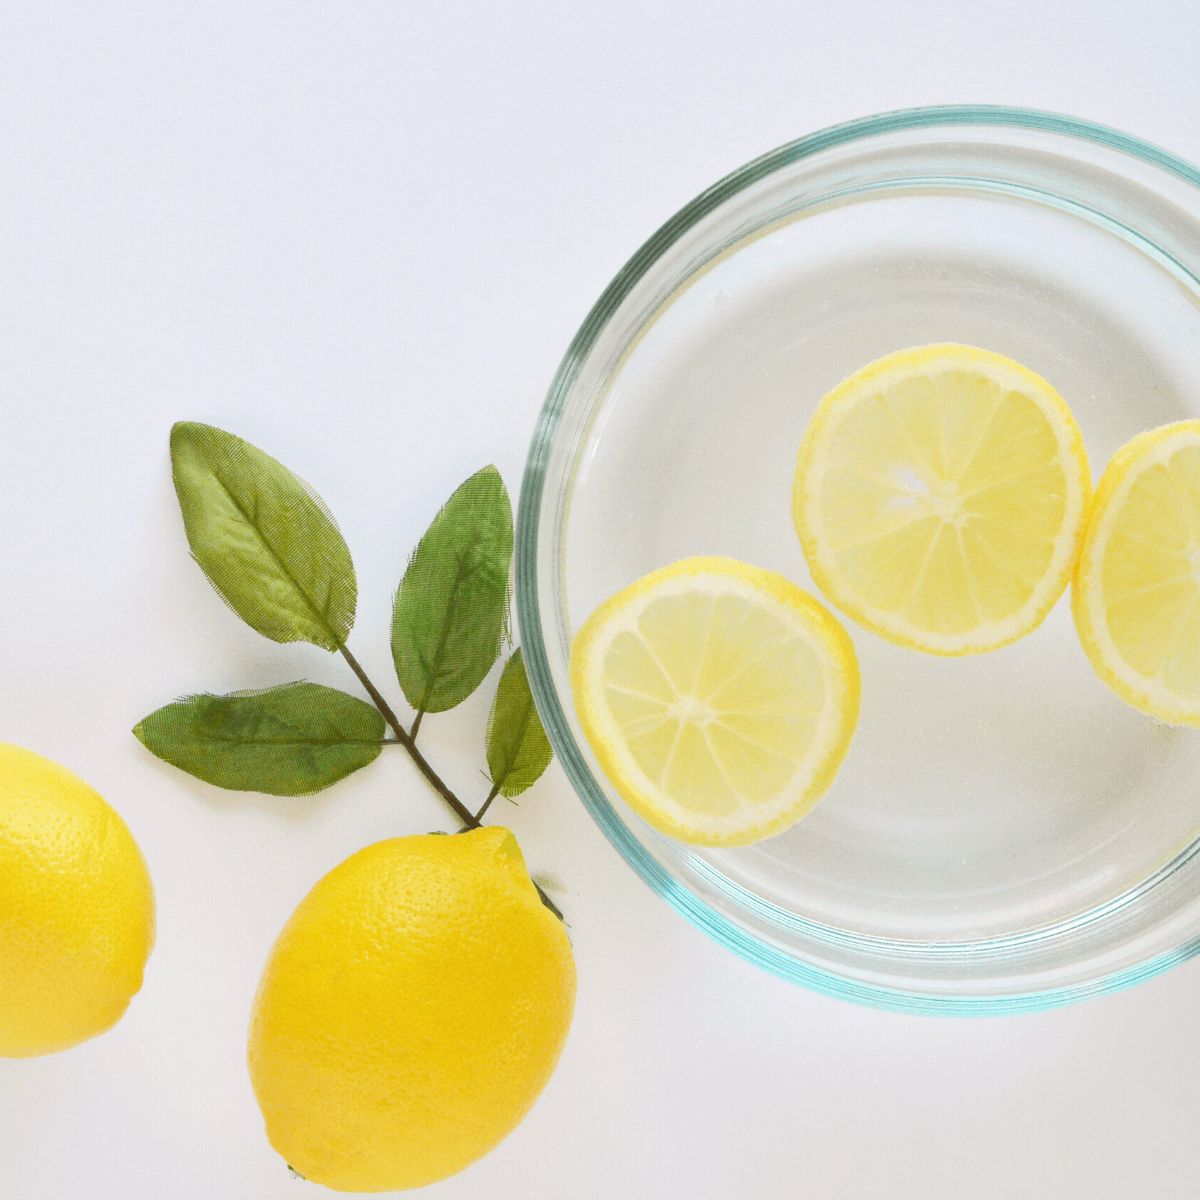 Lemons with a glass of lemon water